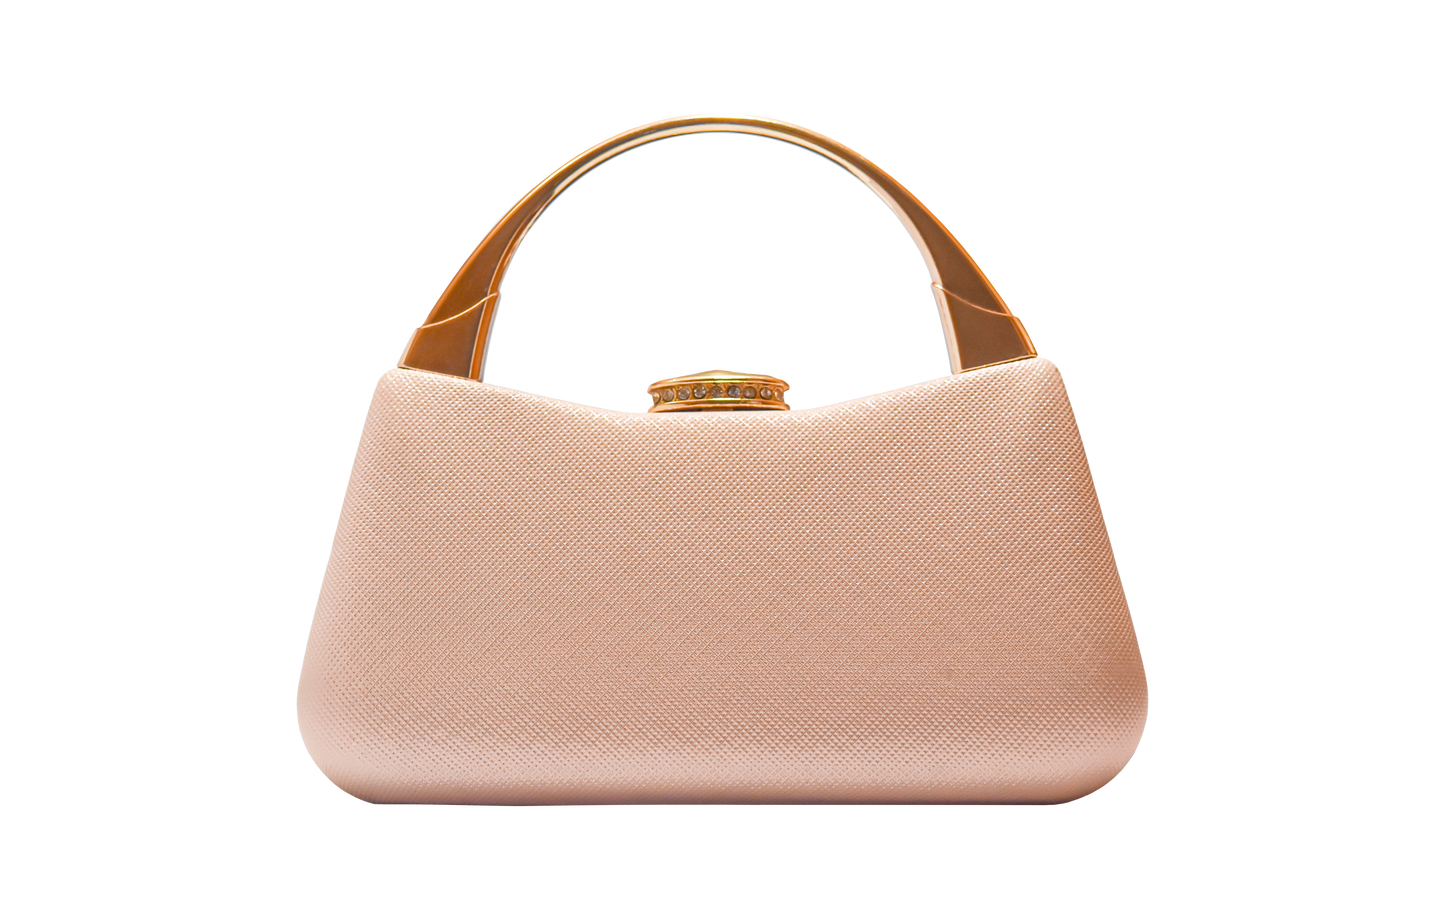 Pink clutch handbag